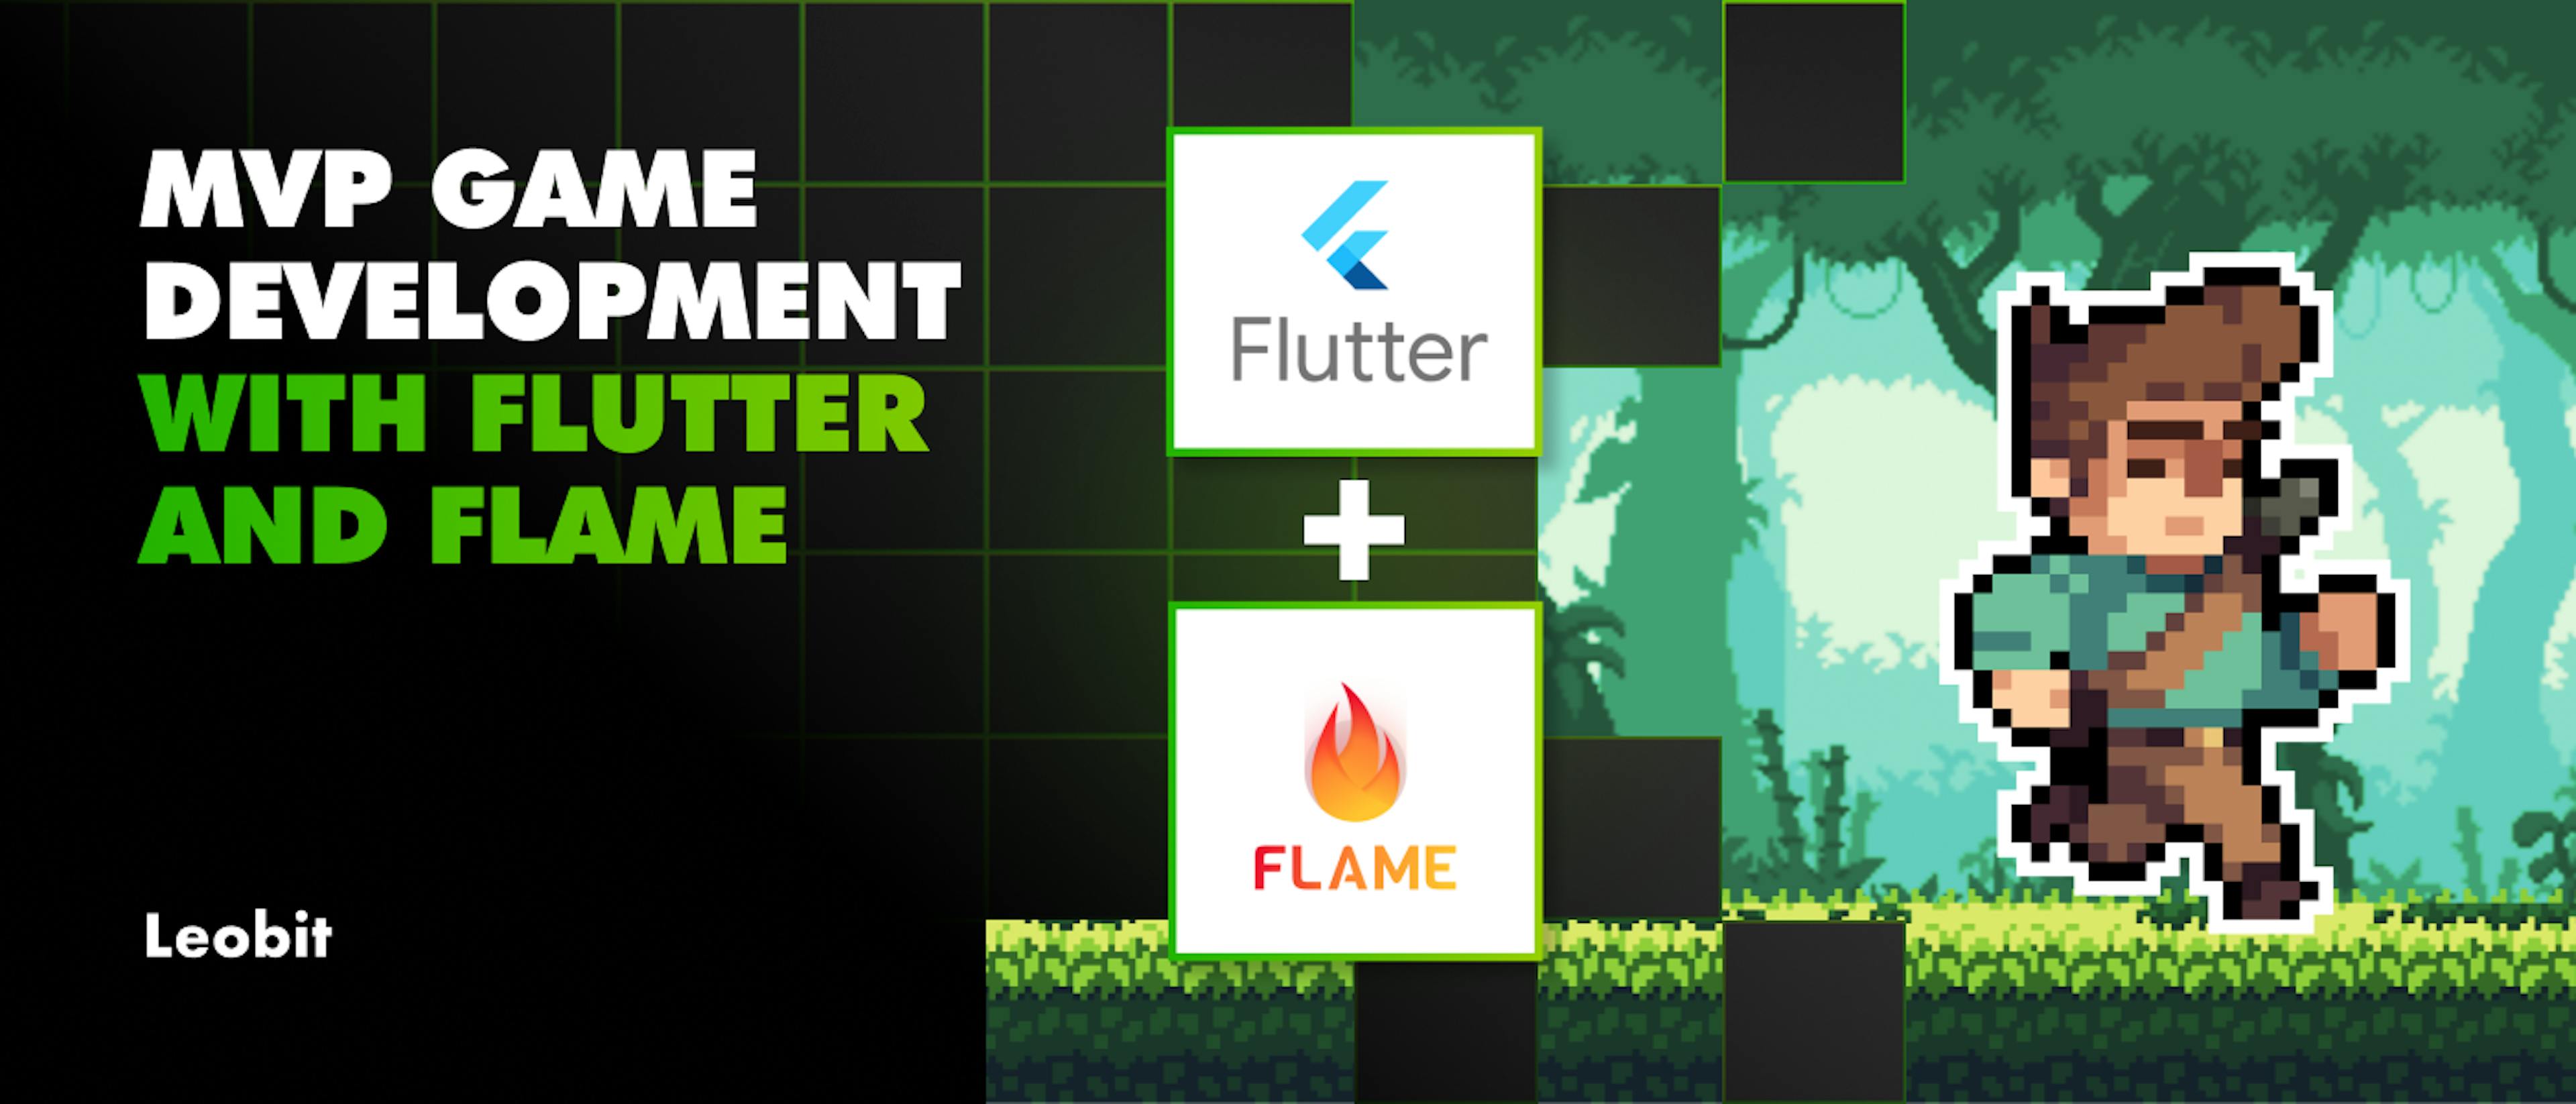 featured image - Разработка игр MVP с Flutter и Flame